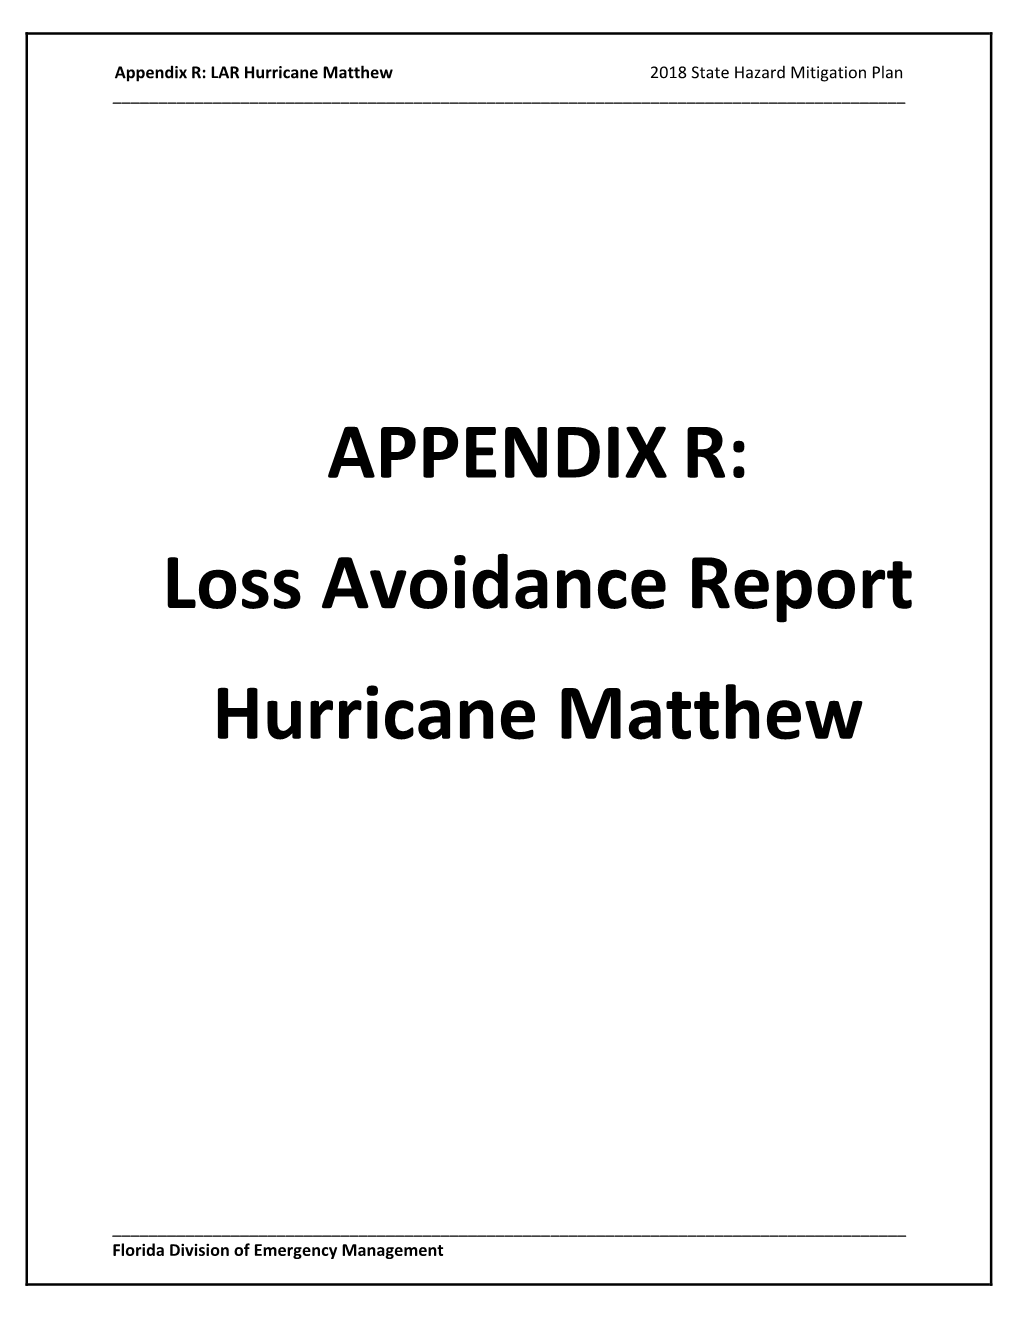 Loss Avoidance Report Hurricane Matthew